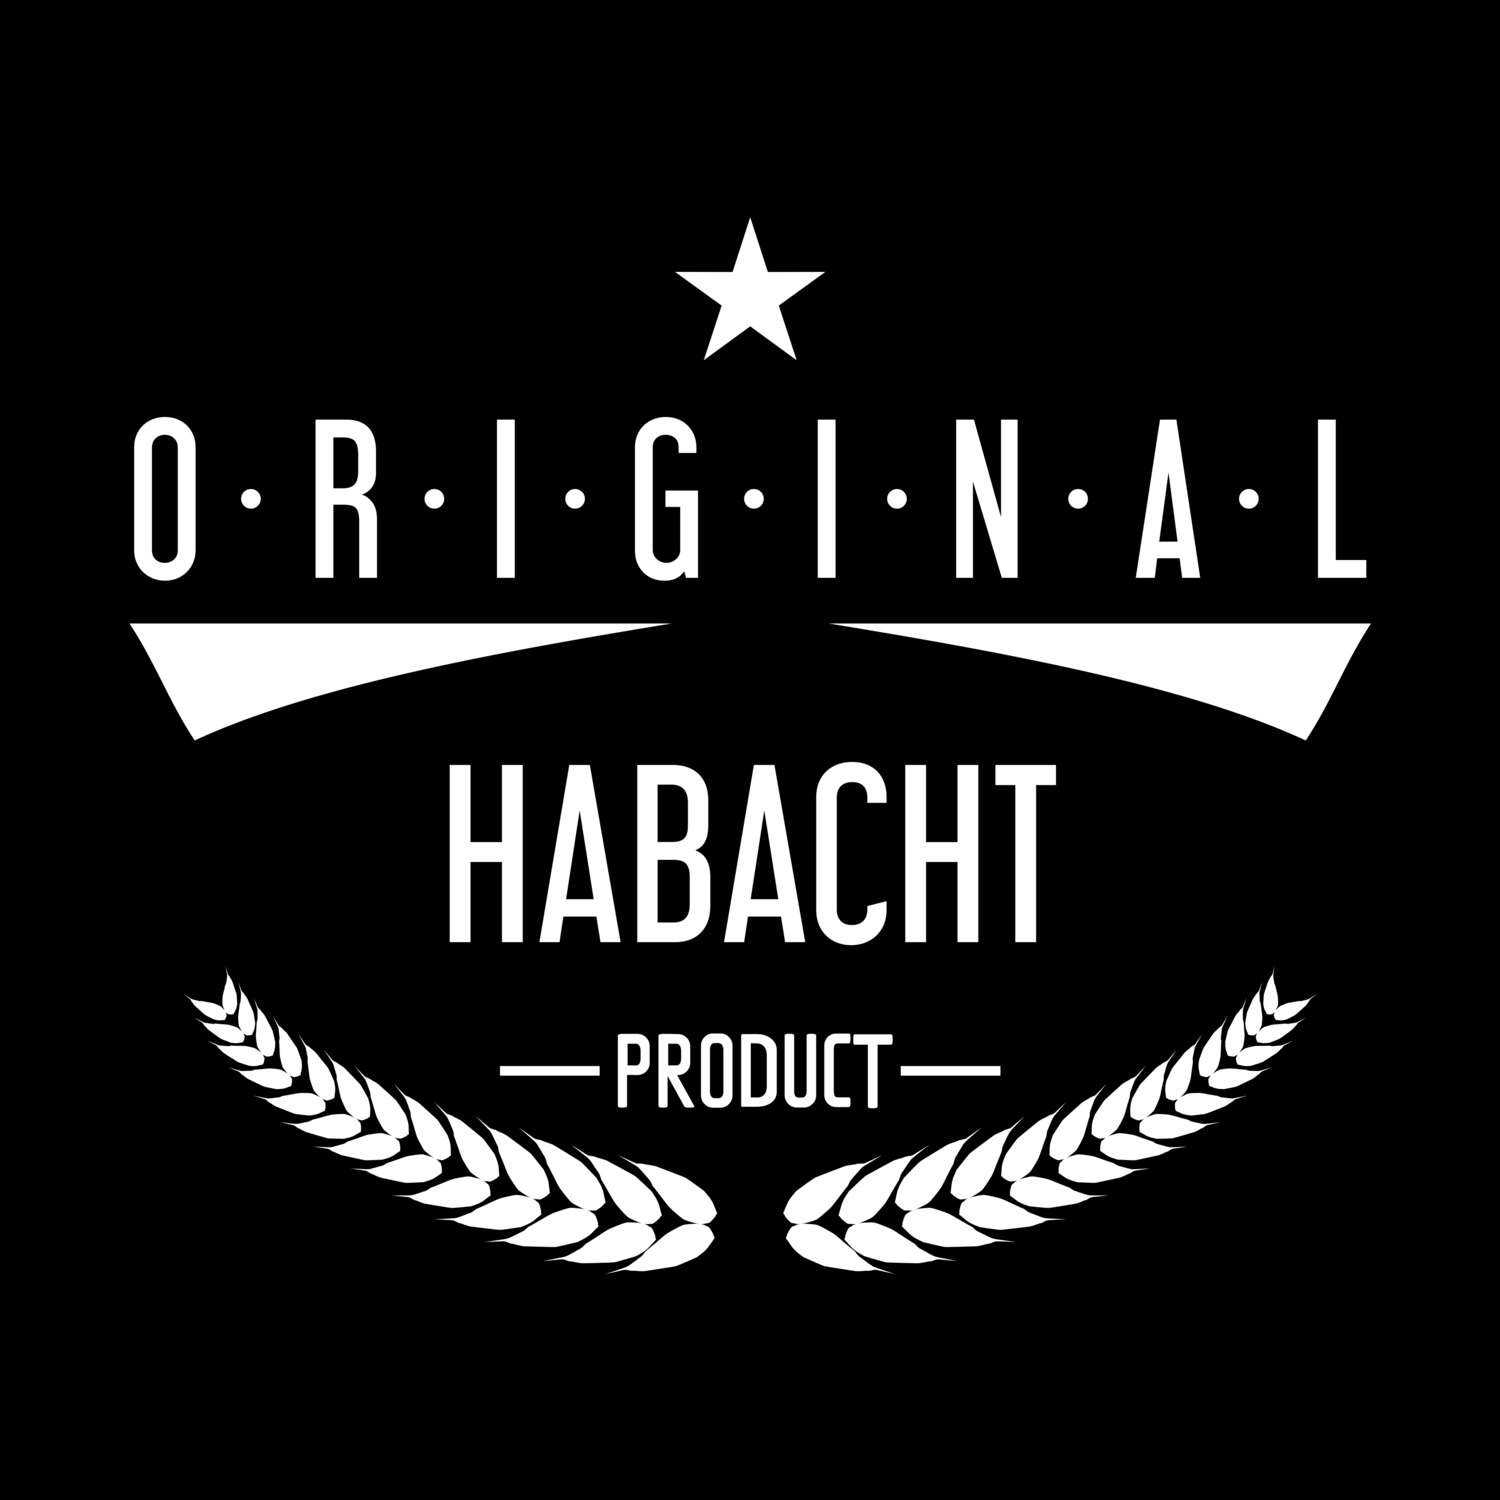 Habacht T-Shirt »Original Product«